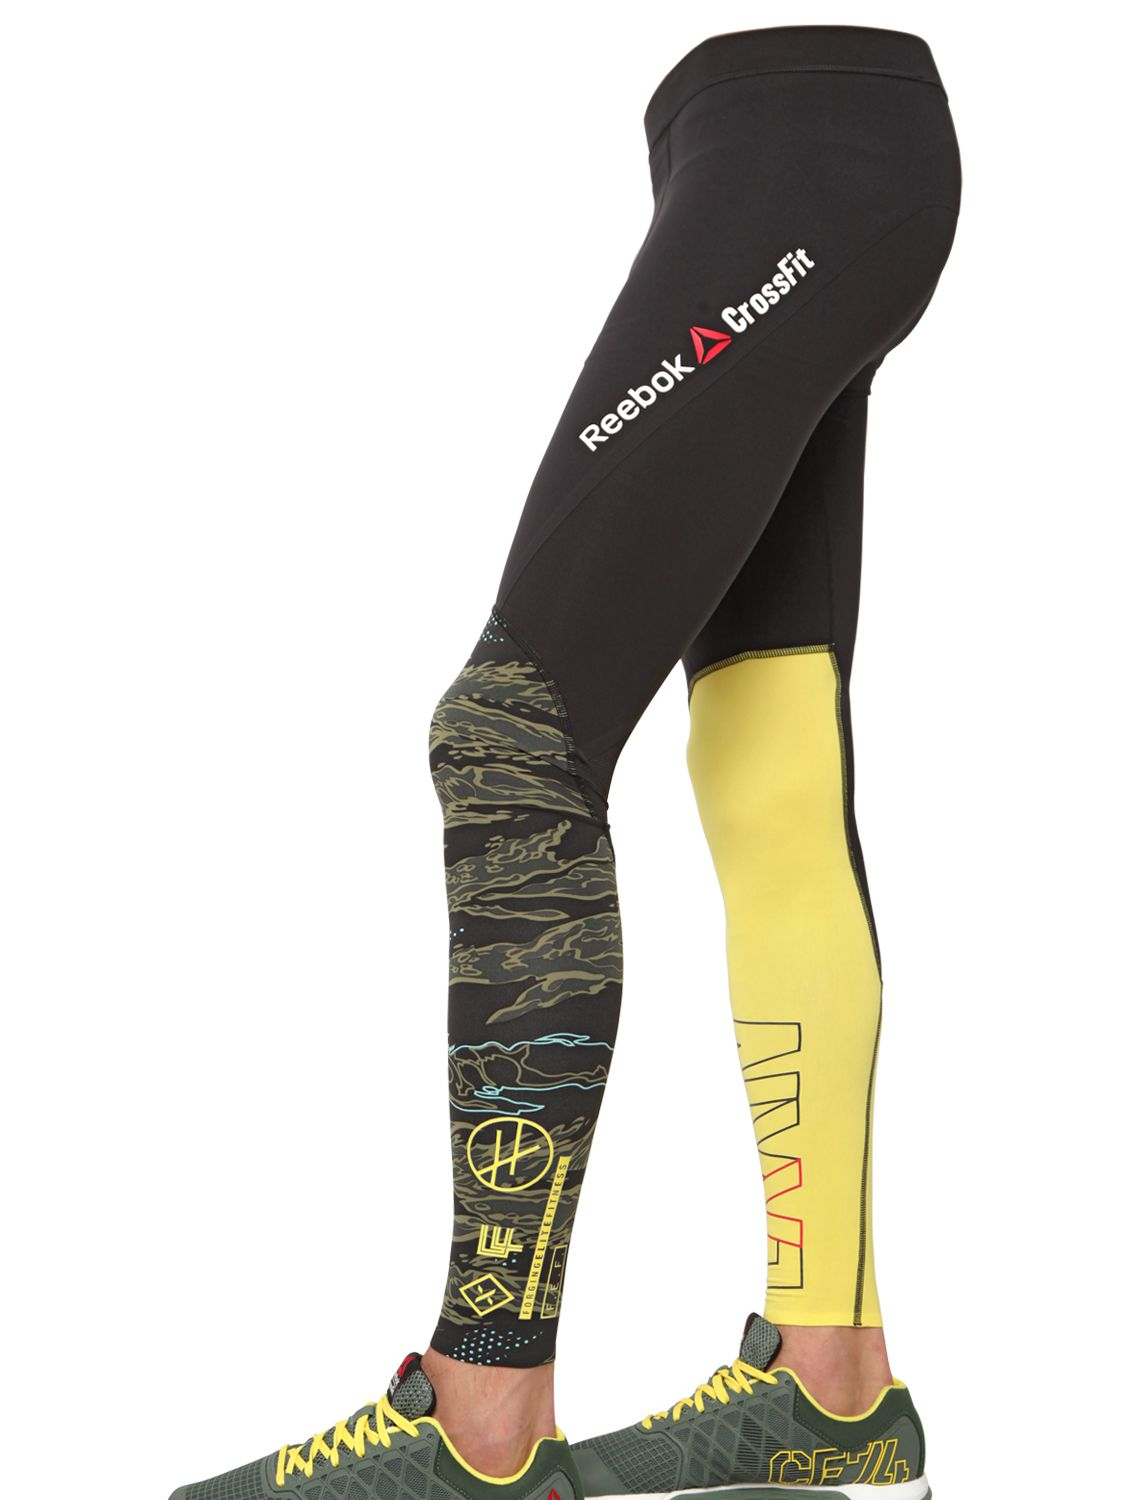 Reebok Crossfit Stretch Leggings in Black/Yellow (Black) for Men - Lyst